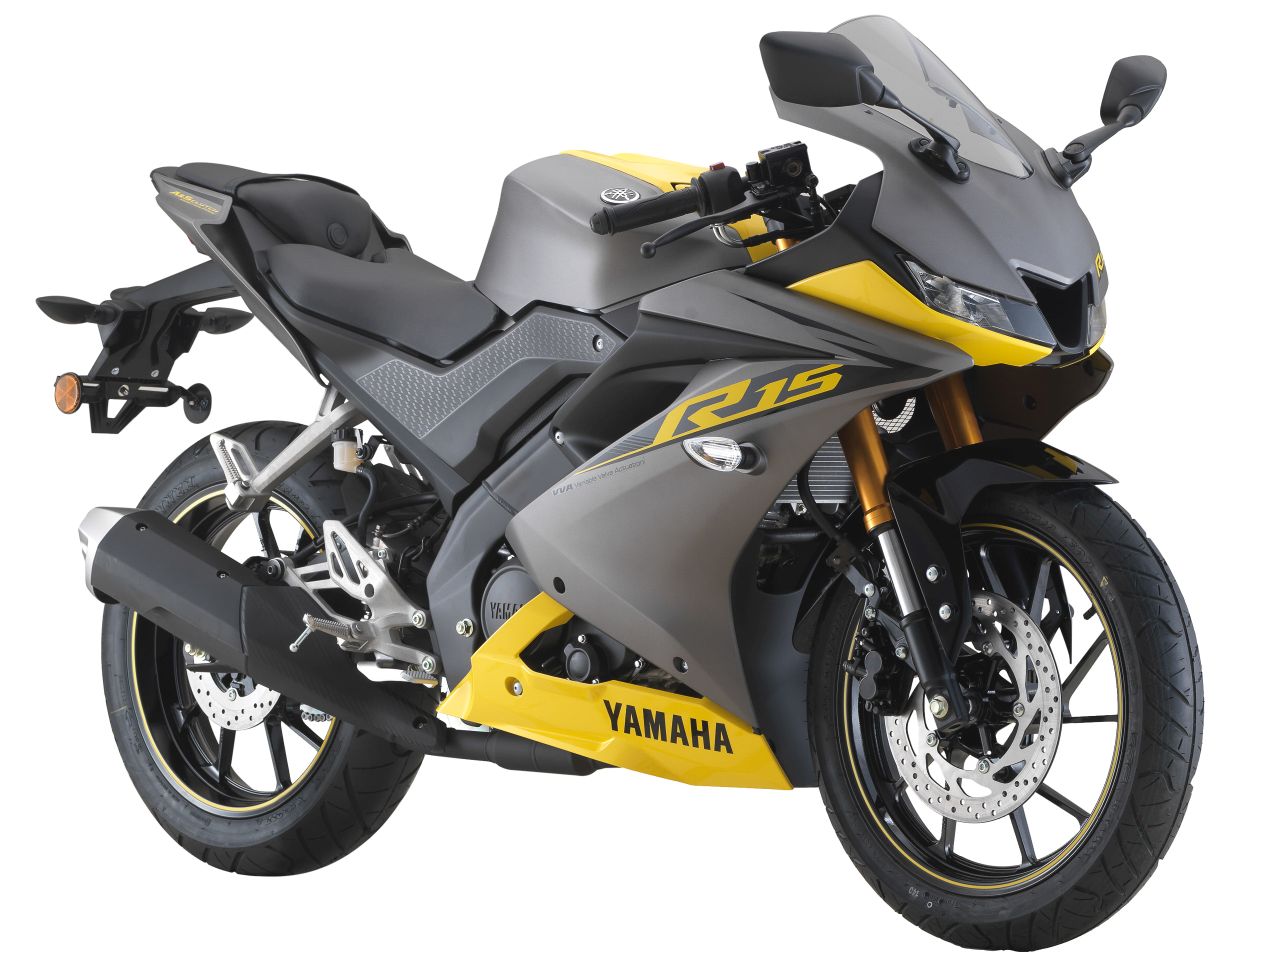 2019 Yamaha R15 V3 in Matte Yellow